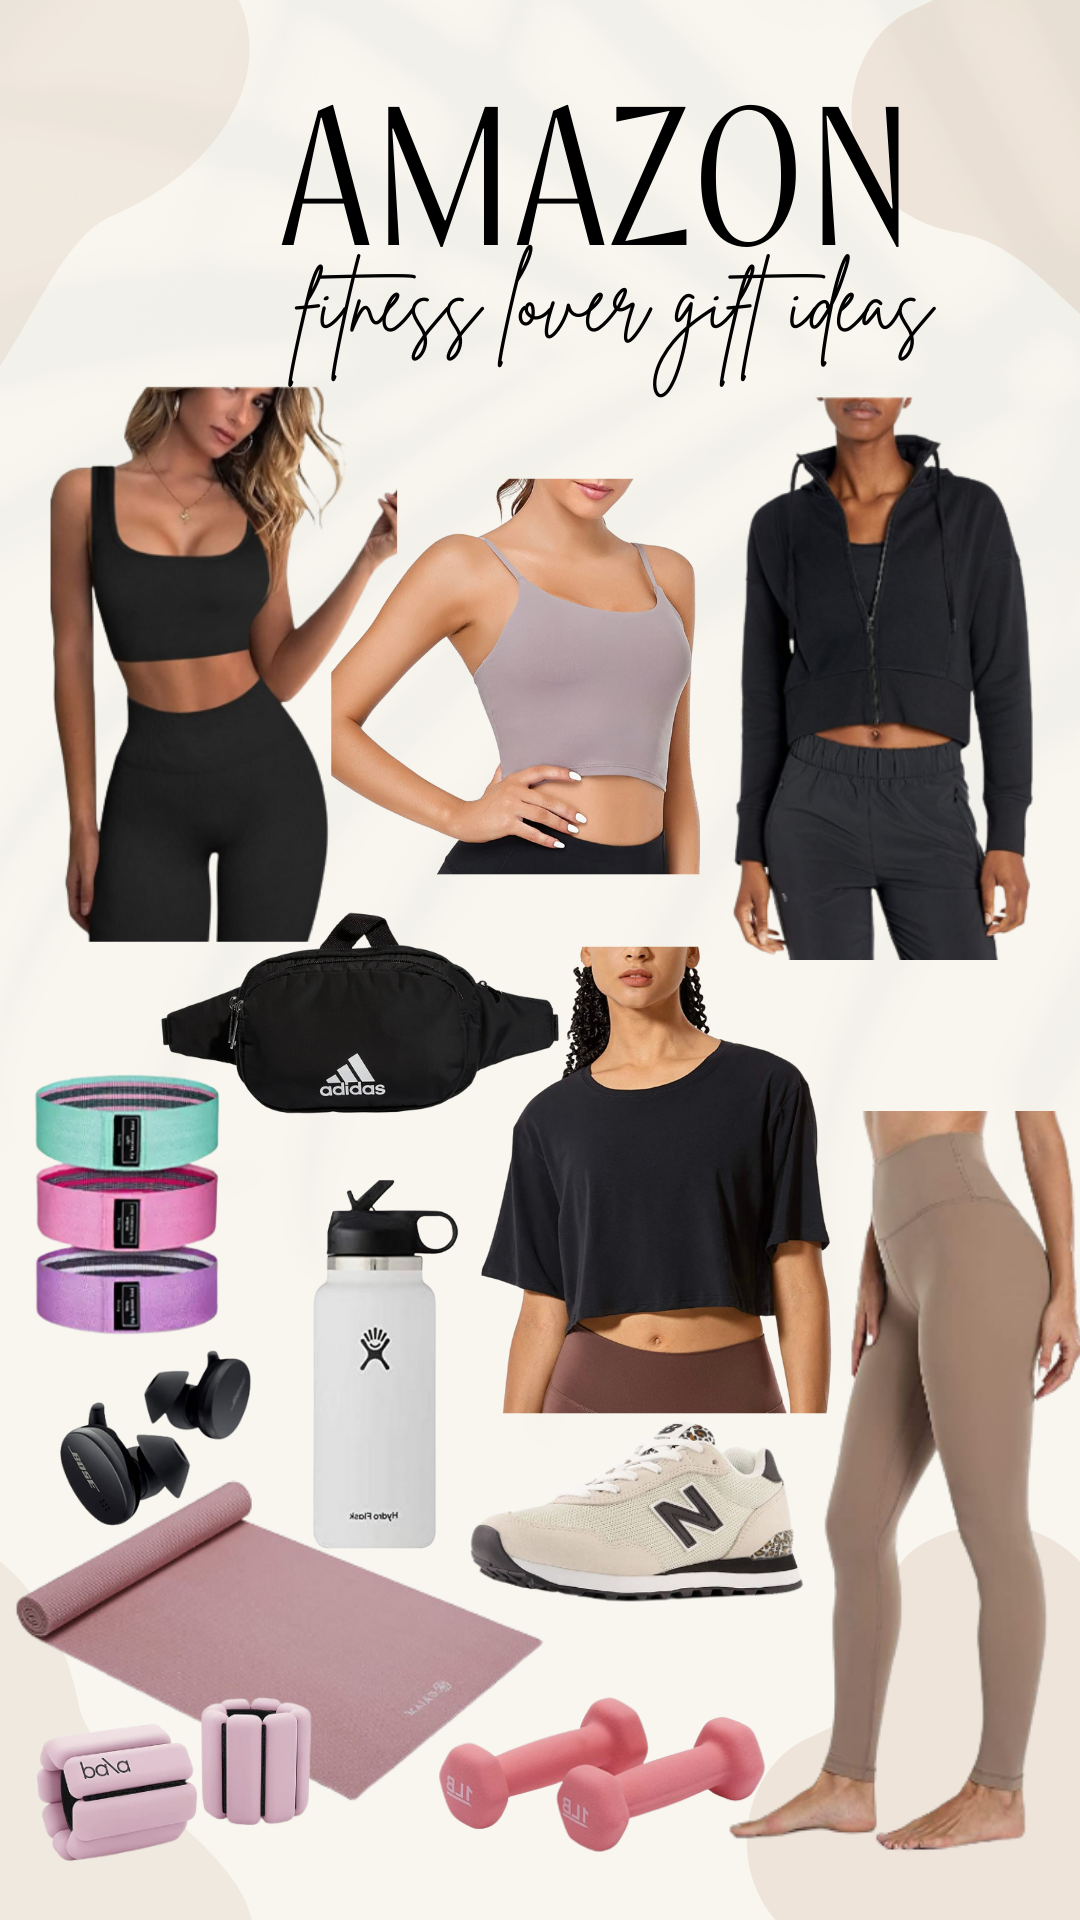 Amazon Holiday Gift Guide-Jacyln De Leon Style. Amazon holiday gift guide for fitness lover. Amazon holiday gifting for fitness lover..